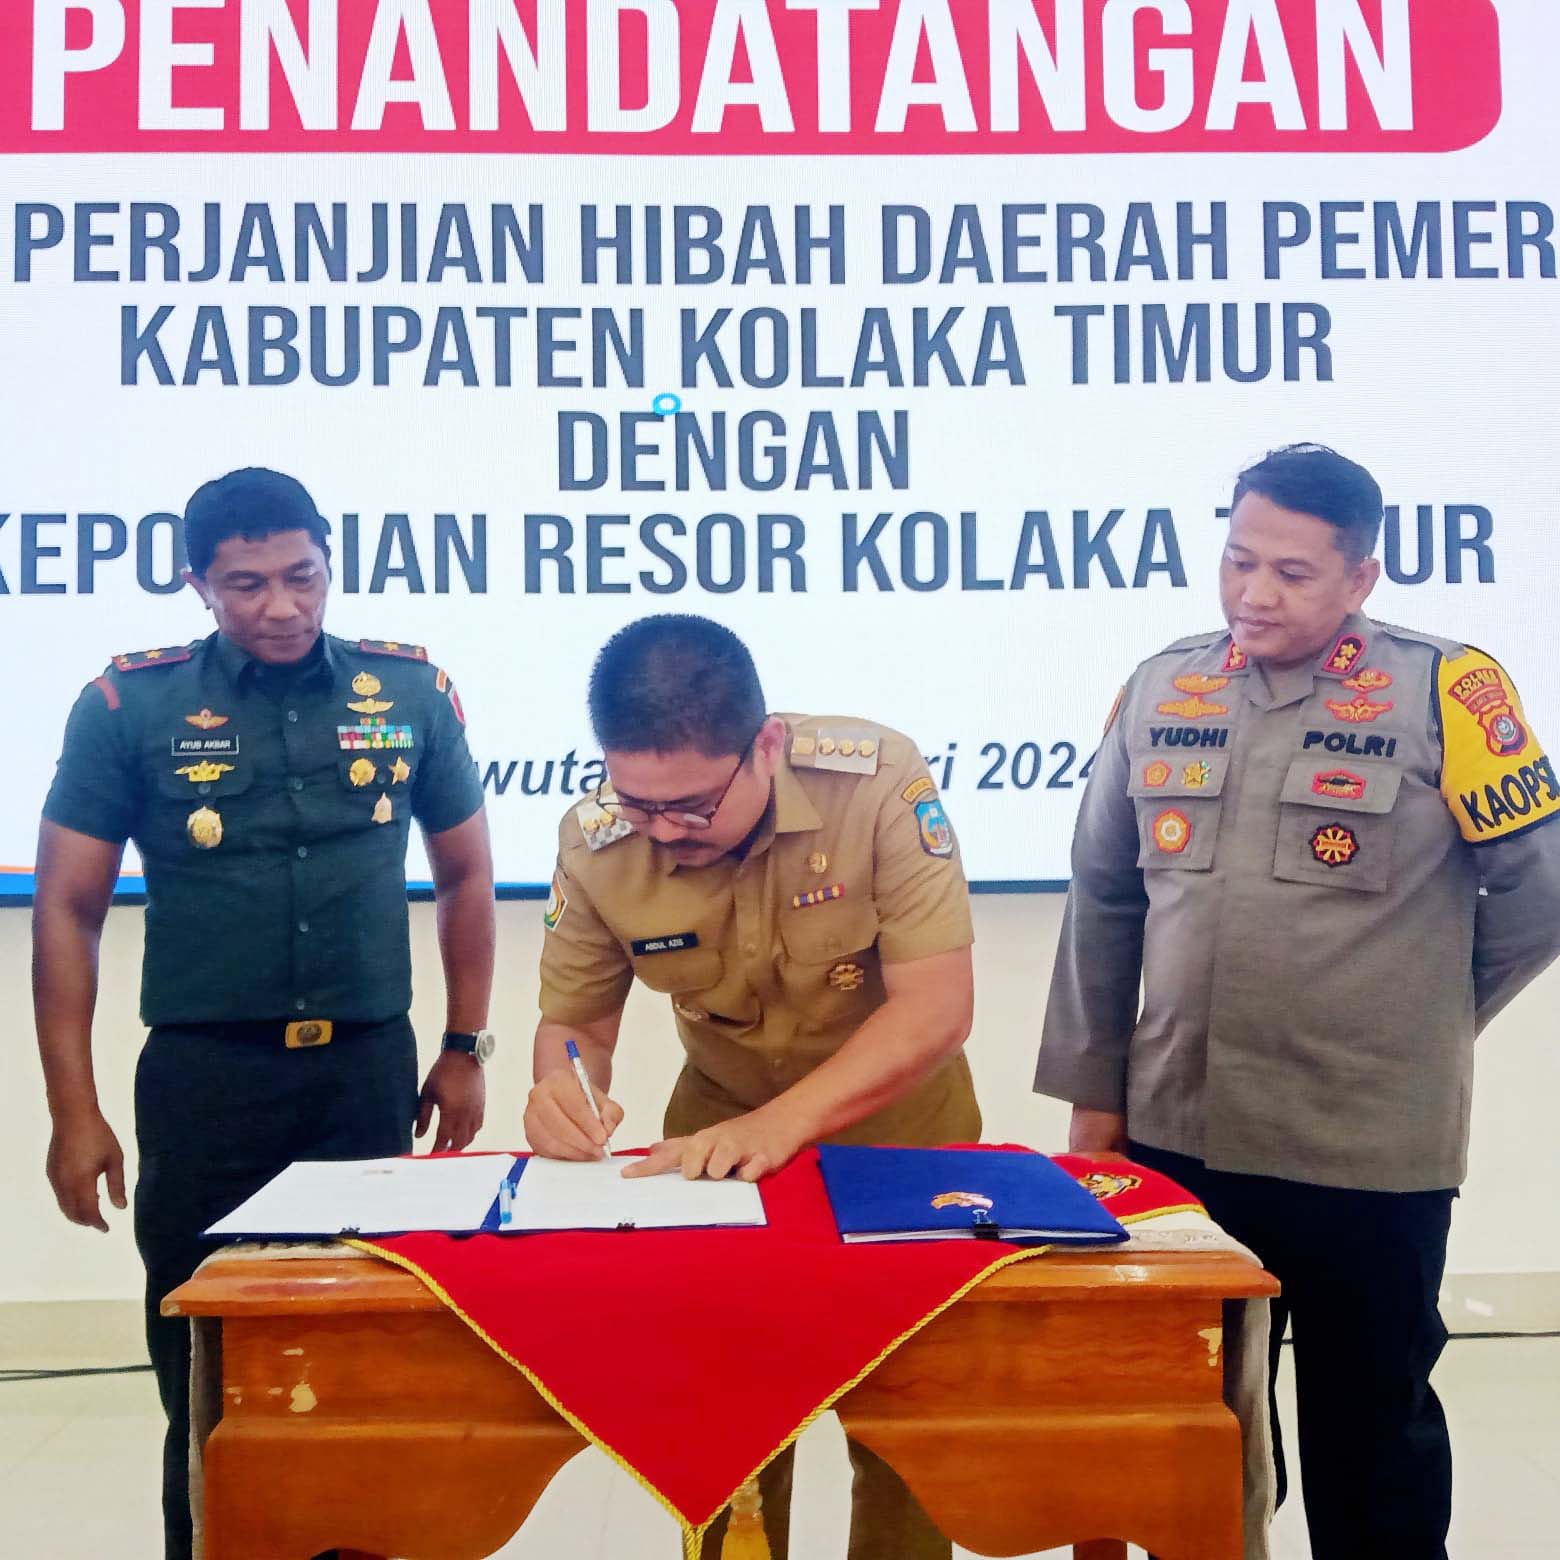 TUNTAS : Bupati Koltim, Abdul Azis (tengah) ketika menandatangani naskah perjanjian hibah daerah terkait alokasi dan distribusi anggaran pengamanan Pilkada bagi lembaga TNI dan Kepolisian. (KUSDIN/KENDARI POS)